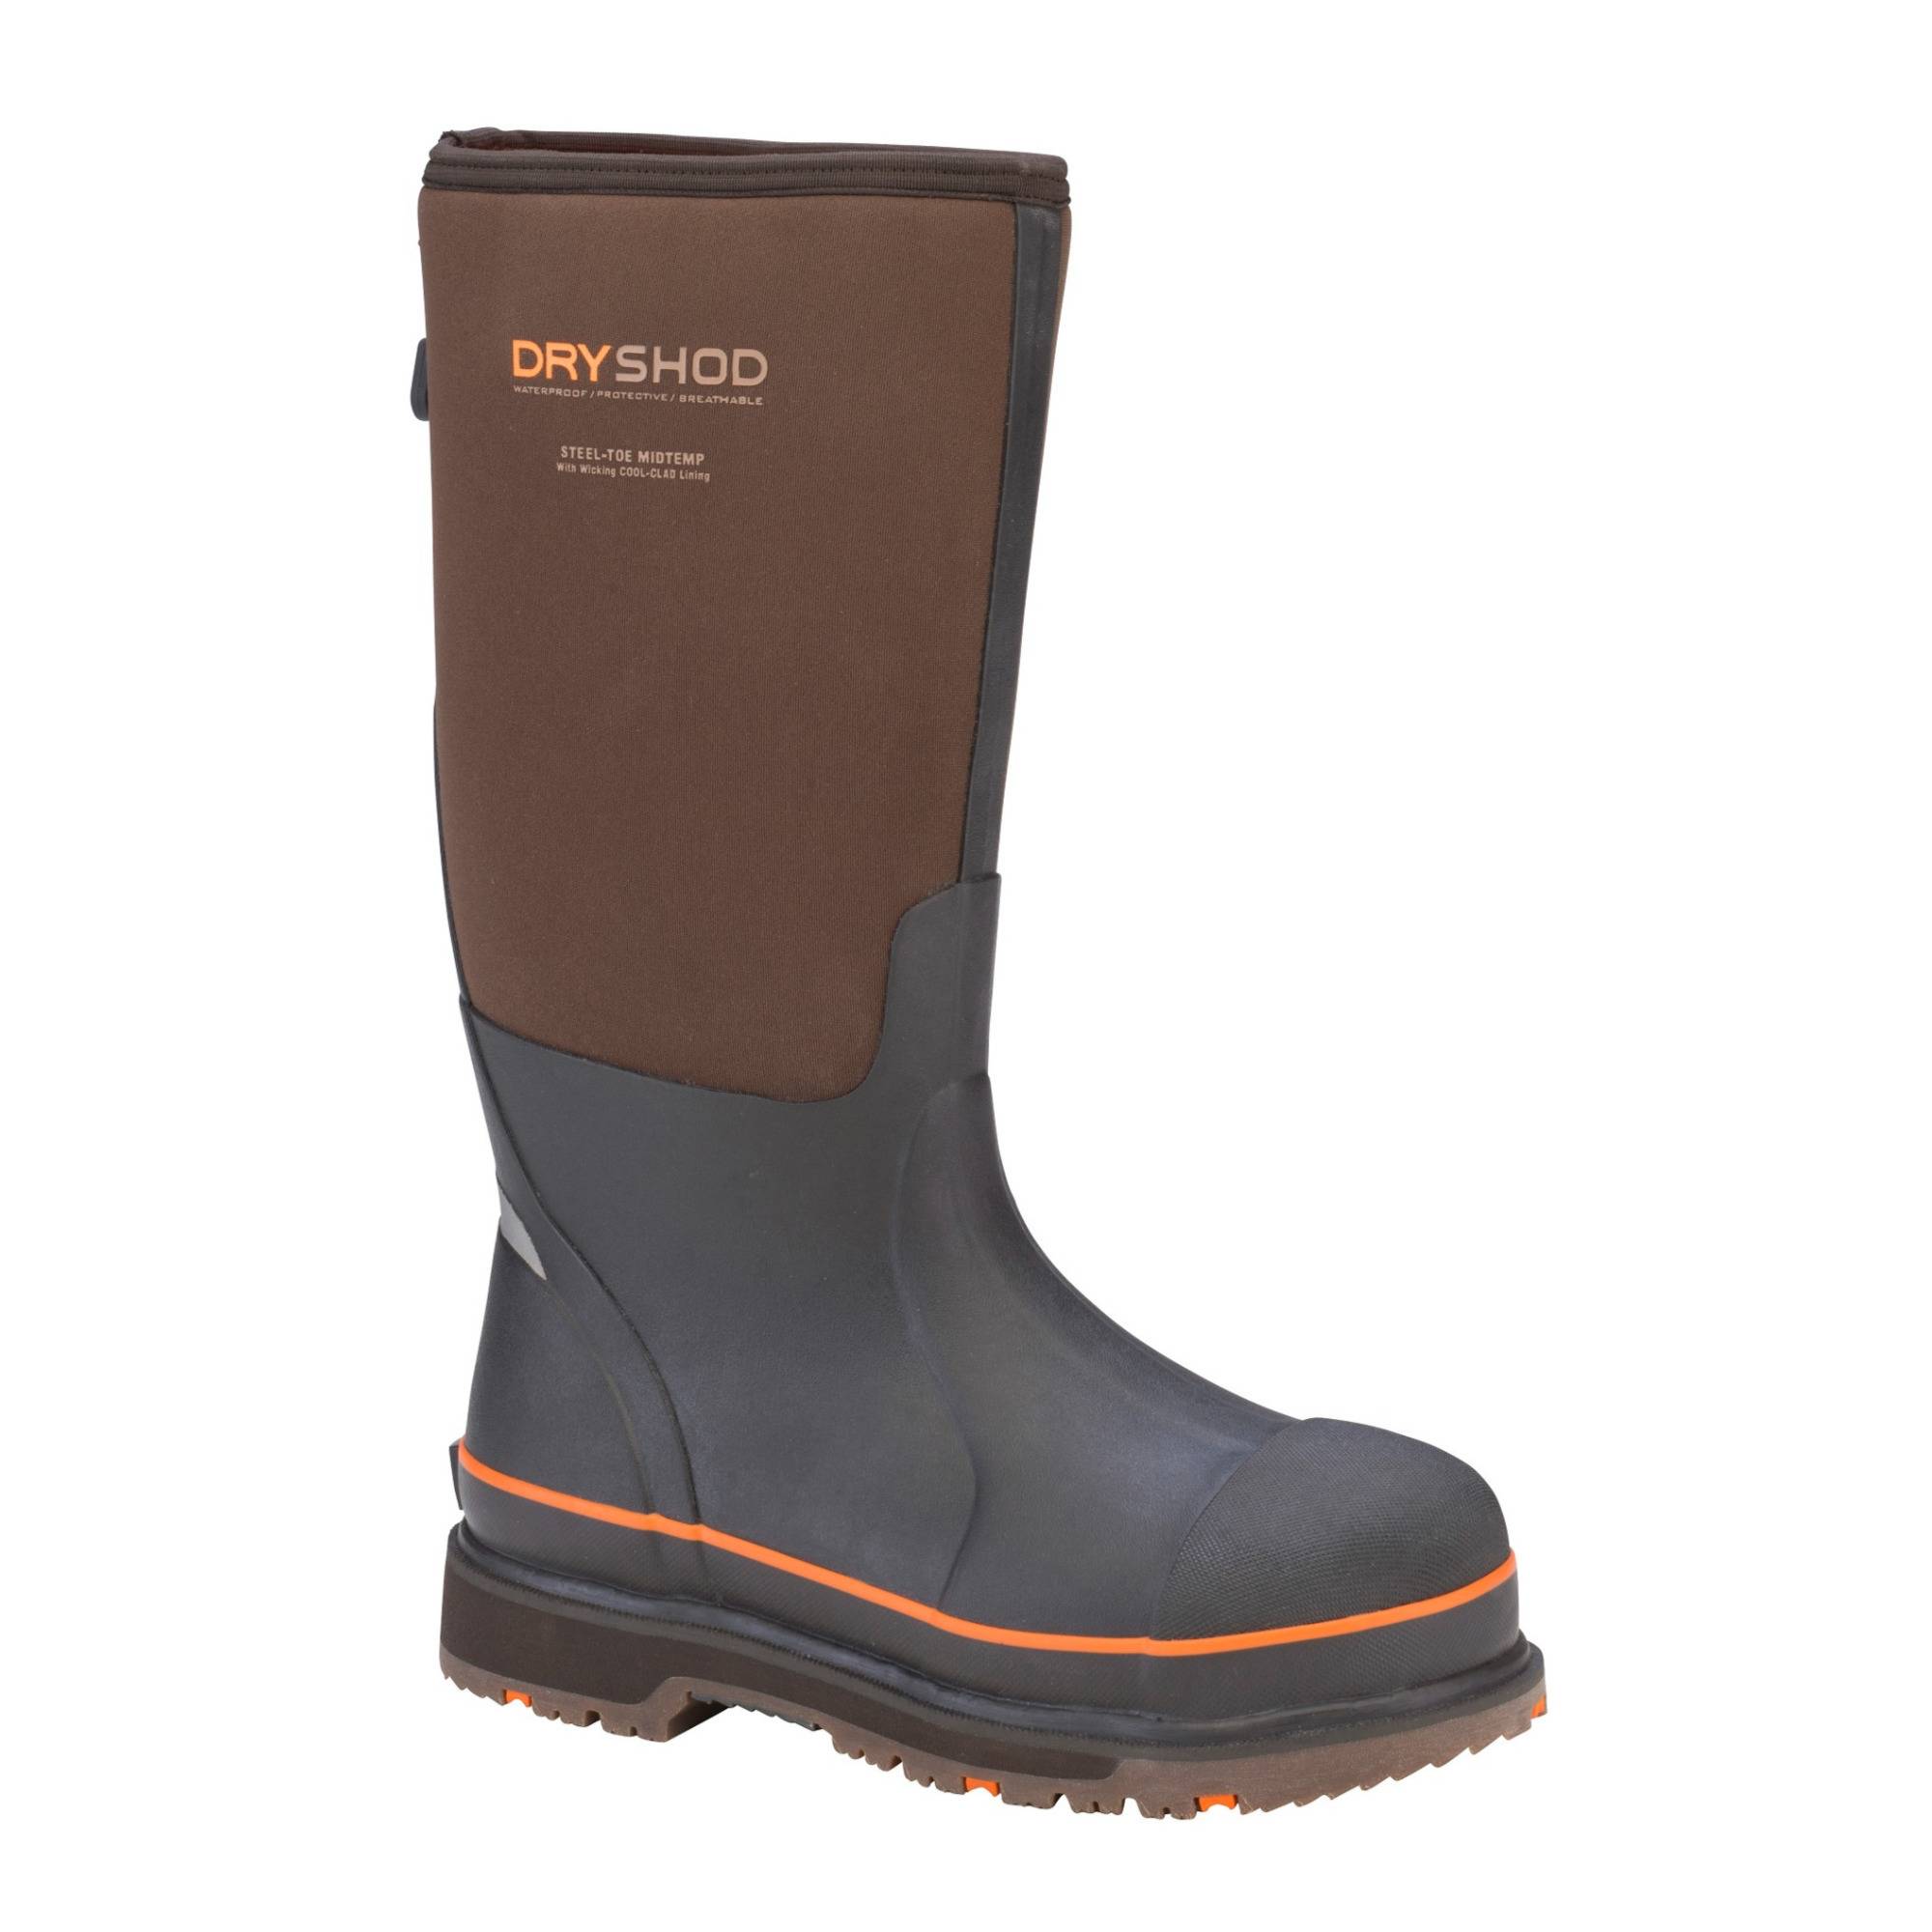 DryShod Steel-Toe WIXIT Cool-Clad Work Boots (Size 13, Hi Cut, Brown/Orange)